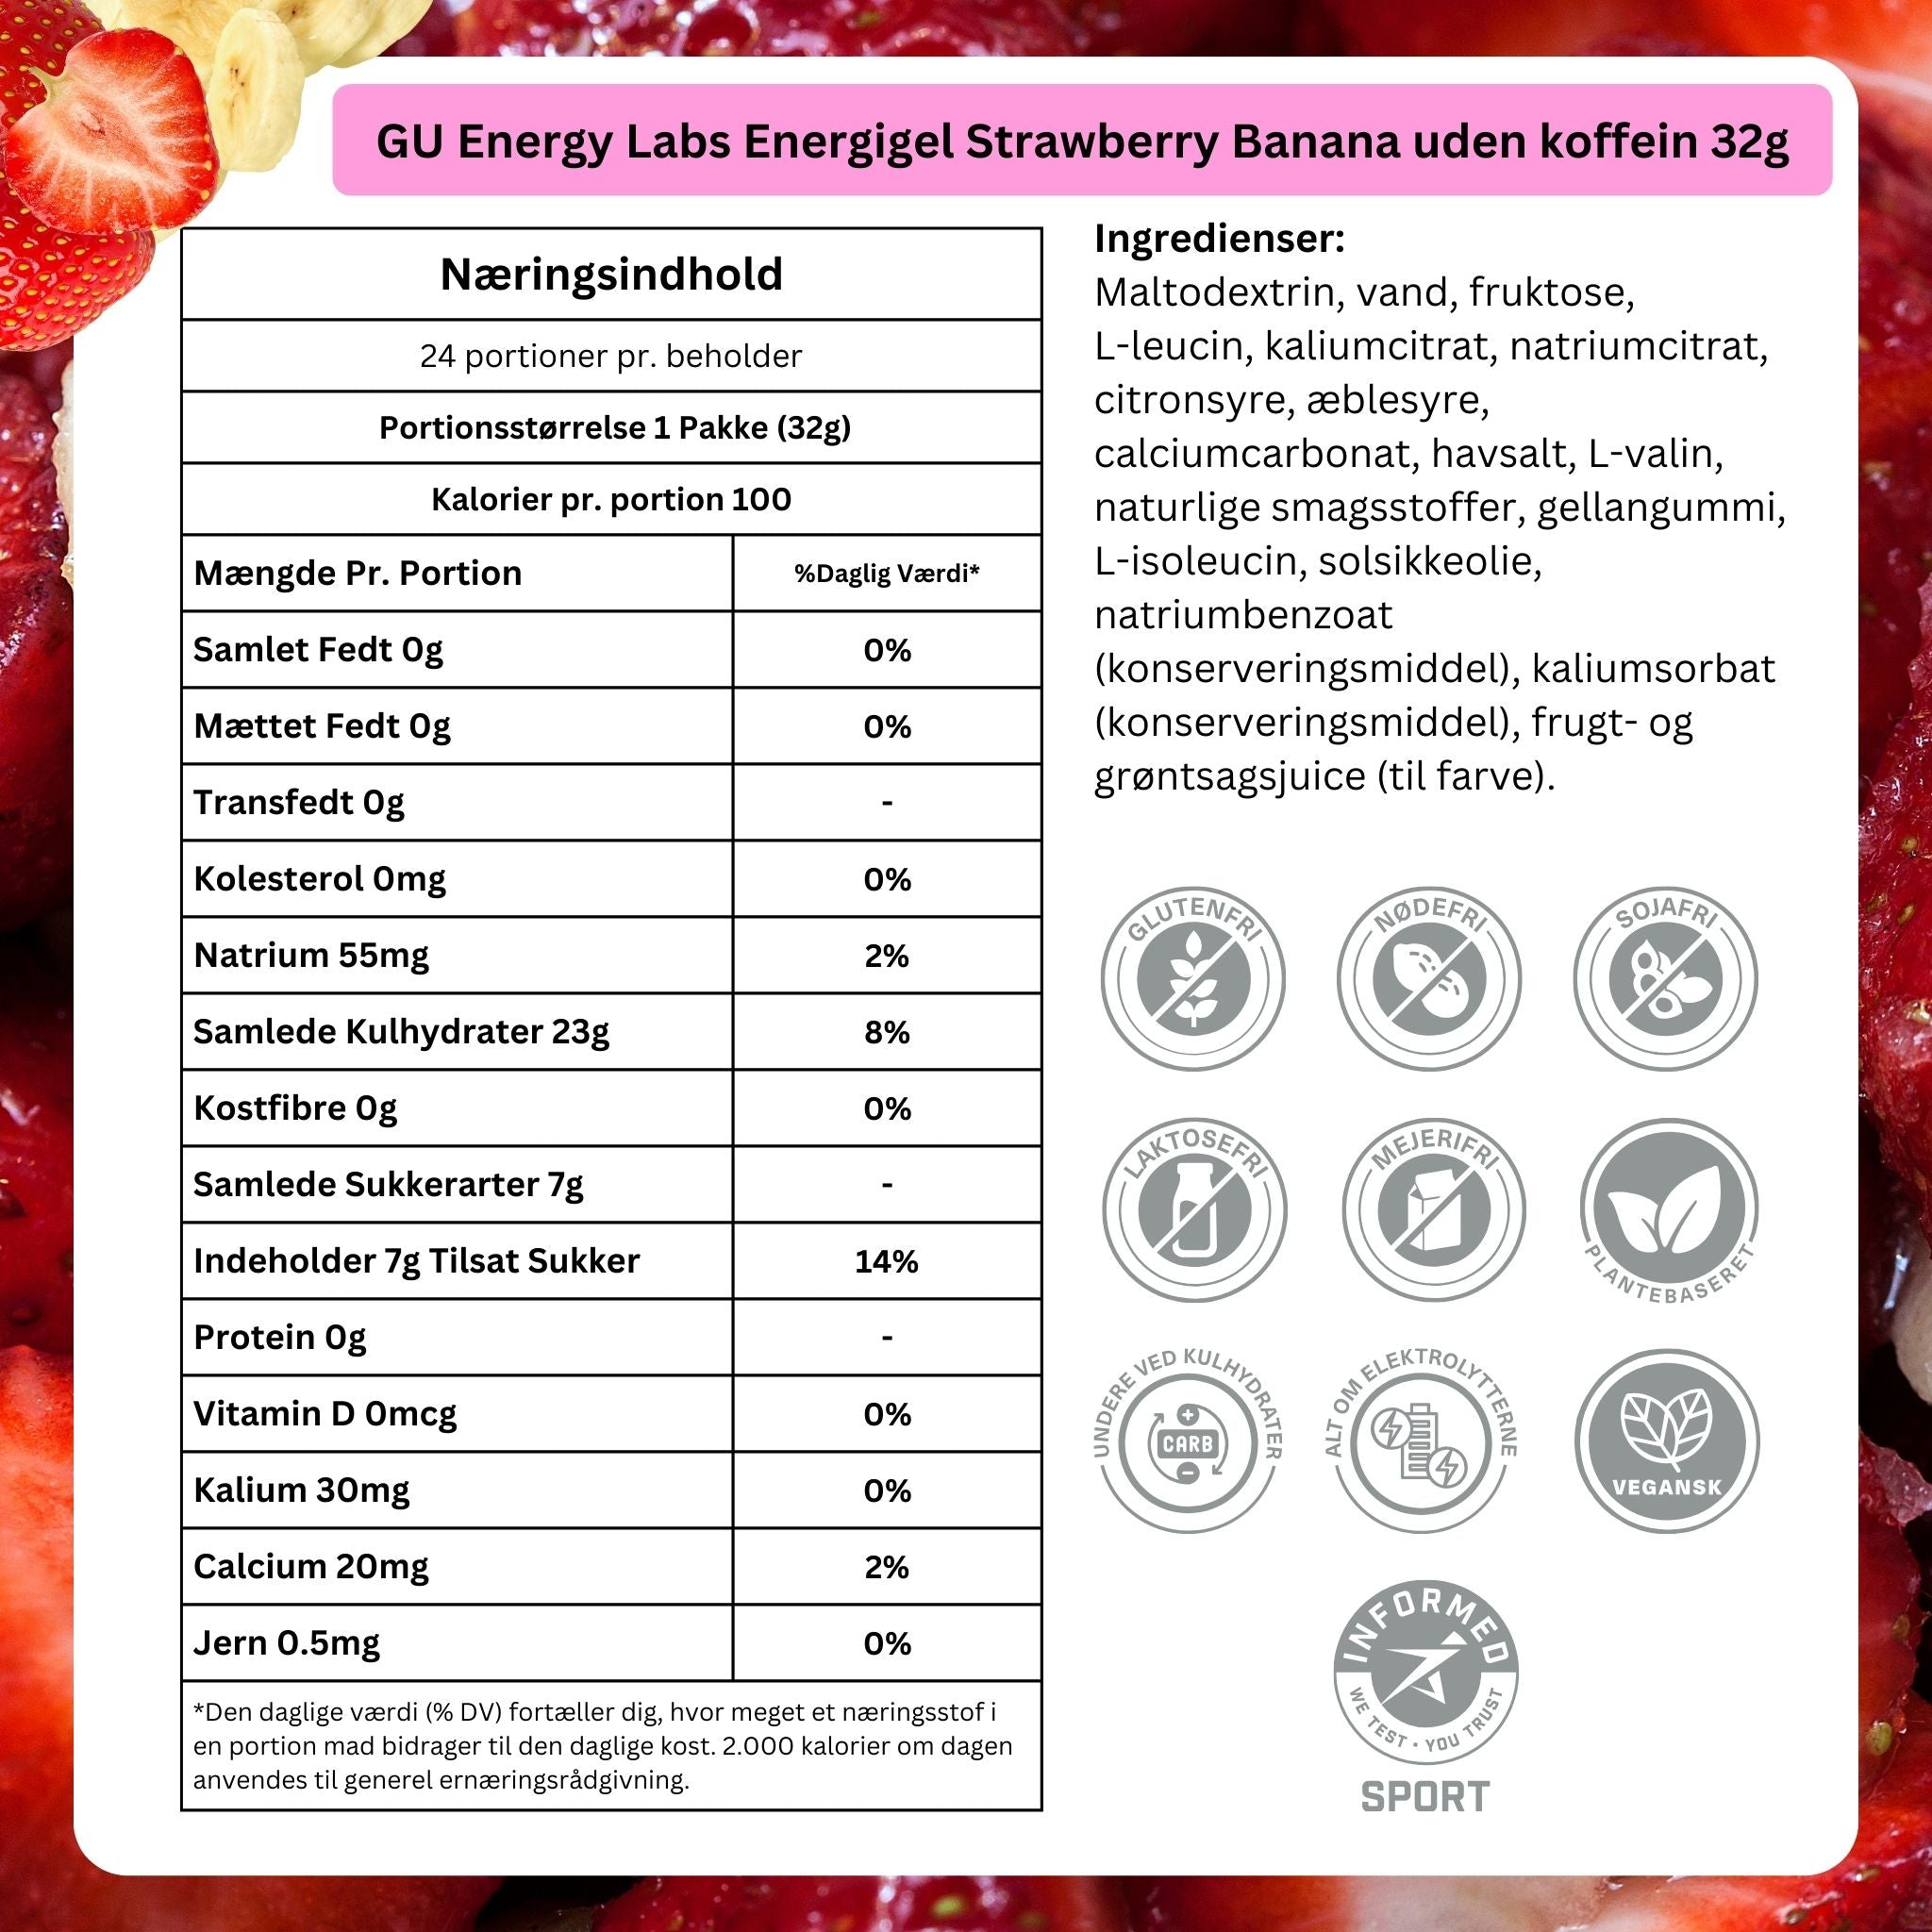 GU Energy Labs Energigel Strawberry Banana uden koffein 32g